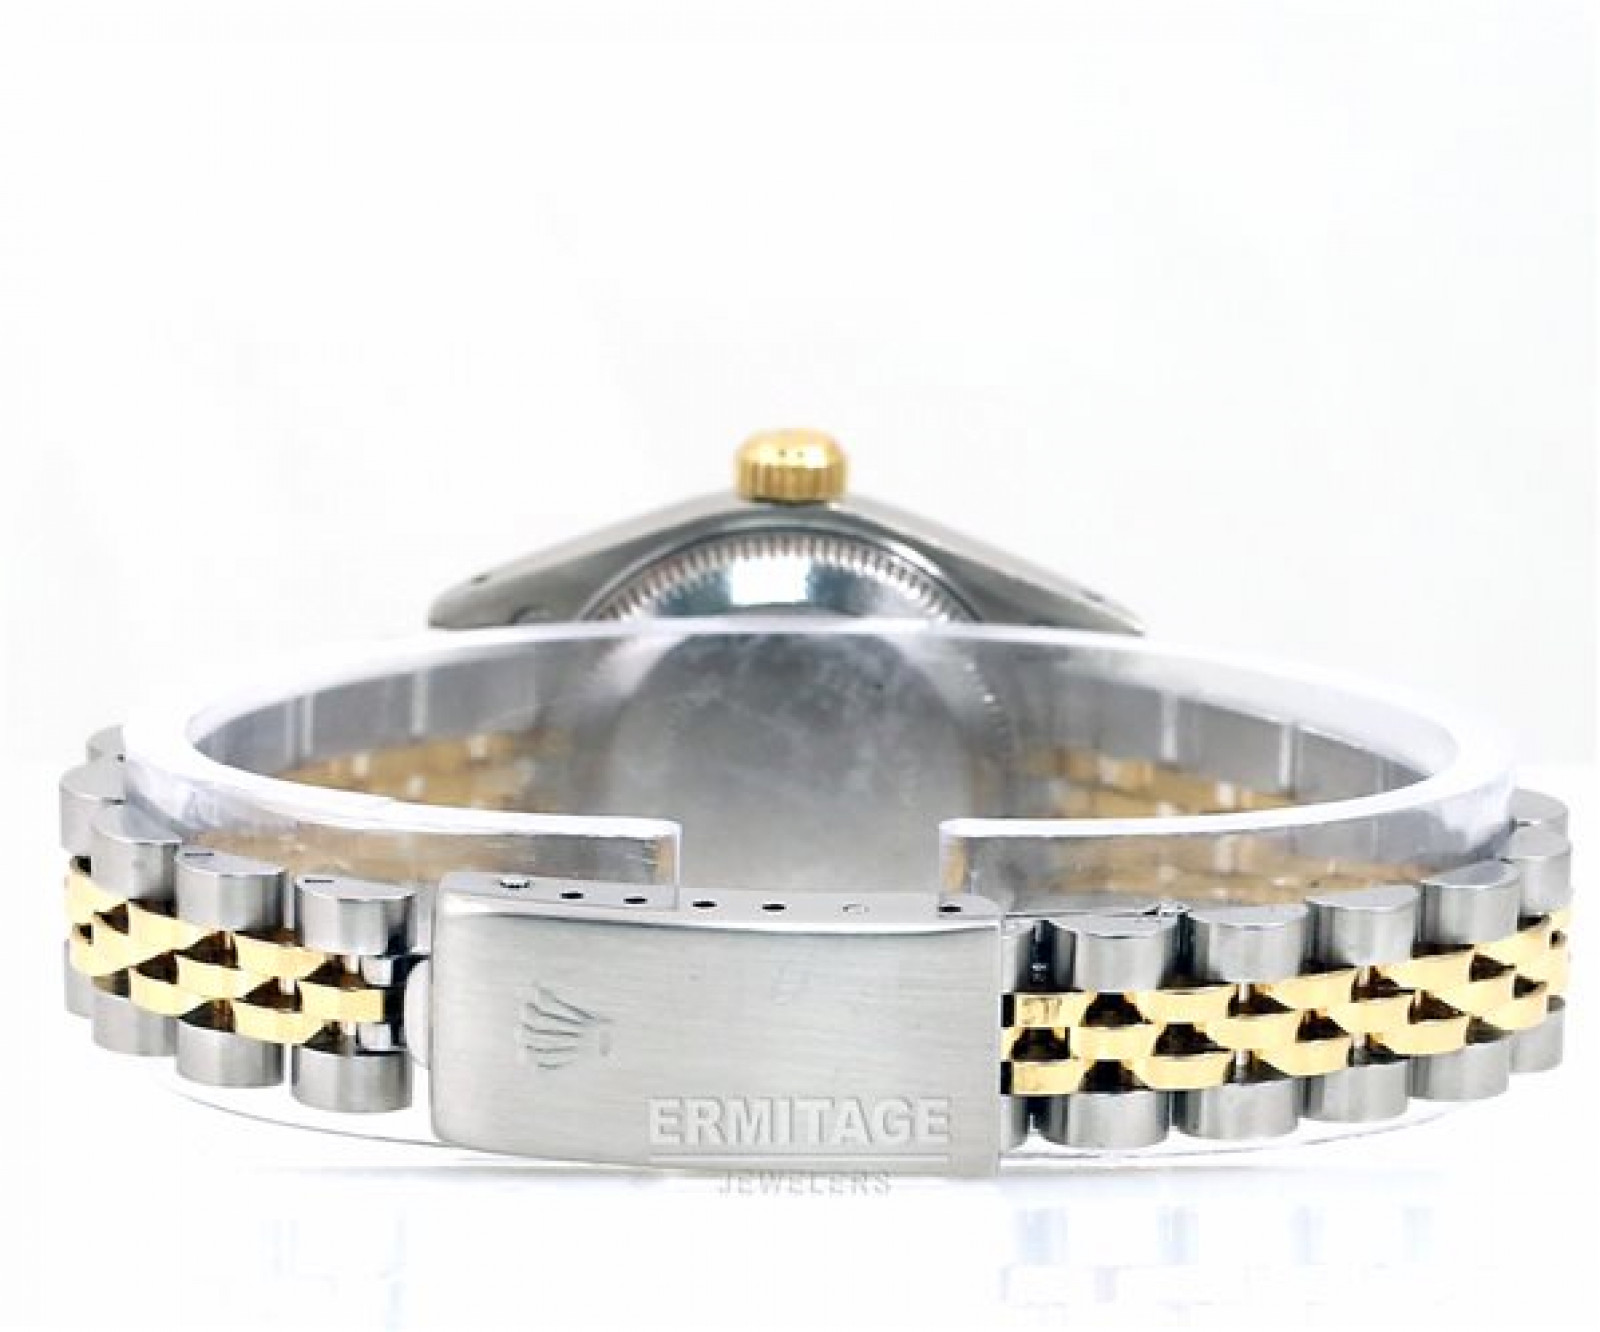 Rolex Women's Datejust 69173 Diamond Dial Watch